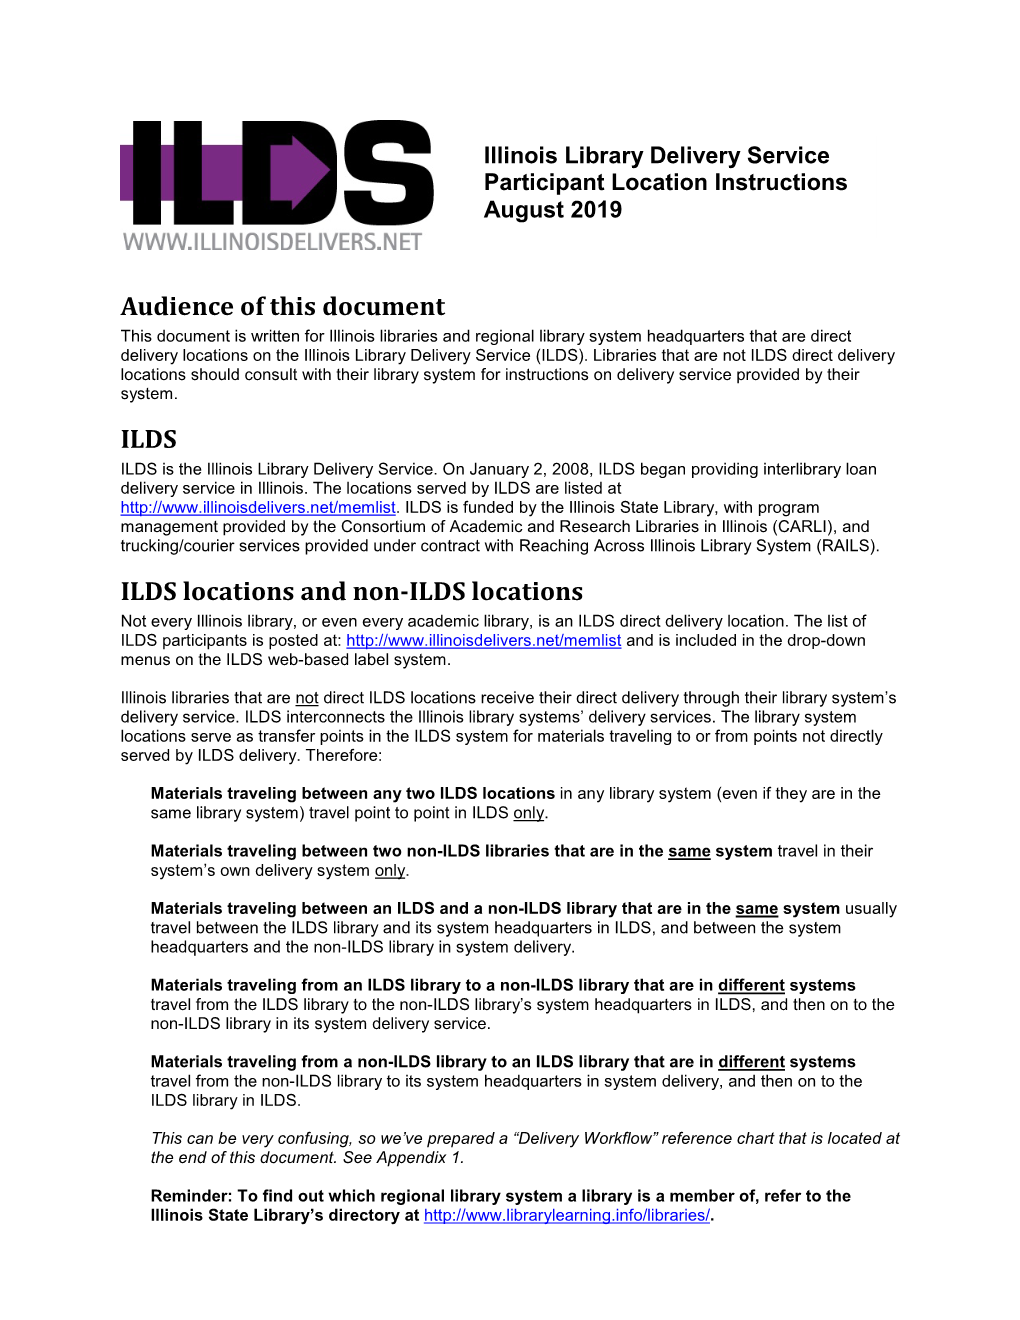 ILDS Instructions